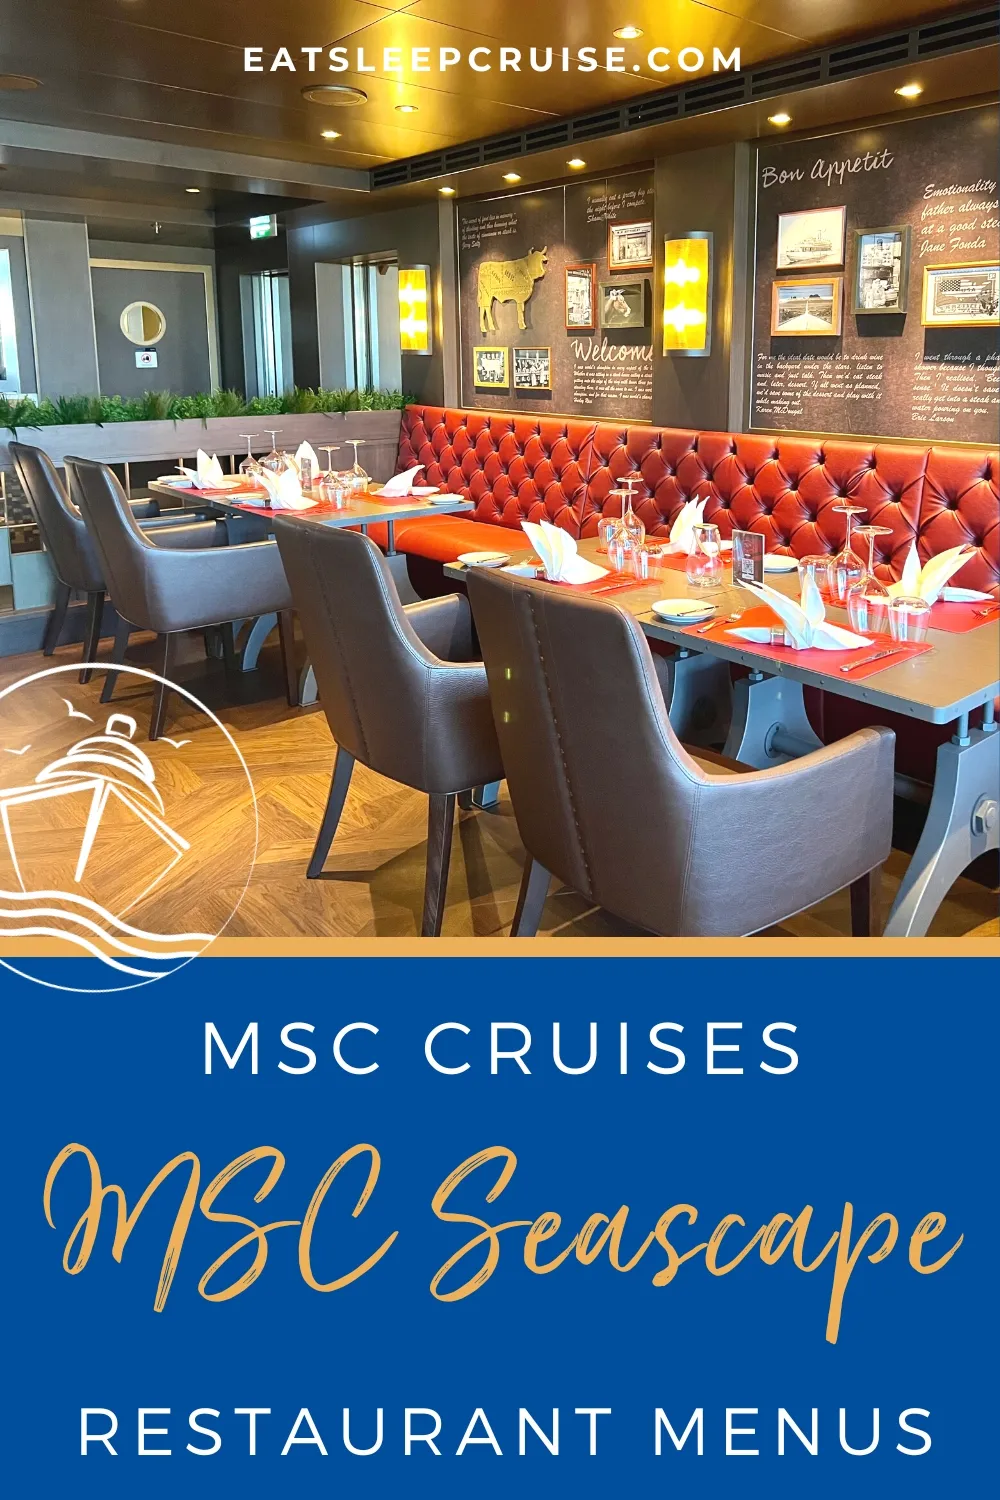 MSC Seascape Restaurants Guide